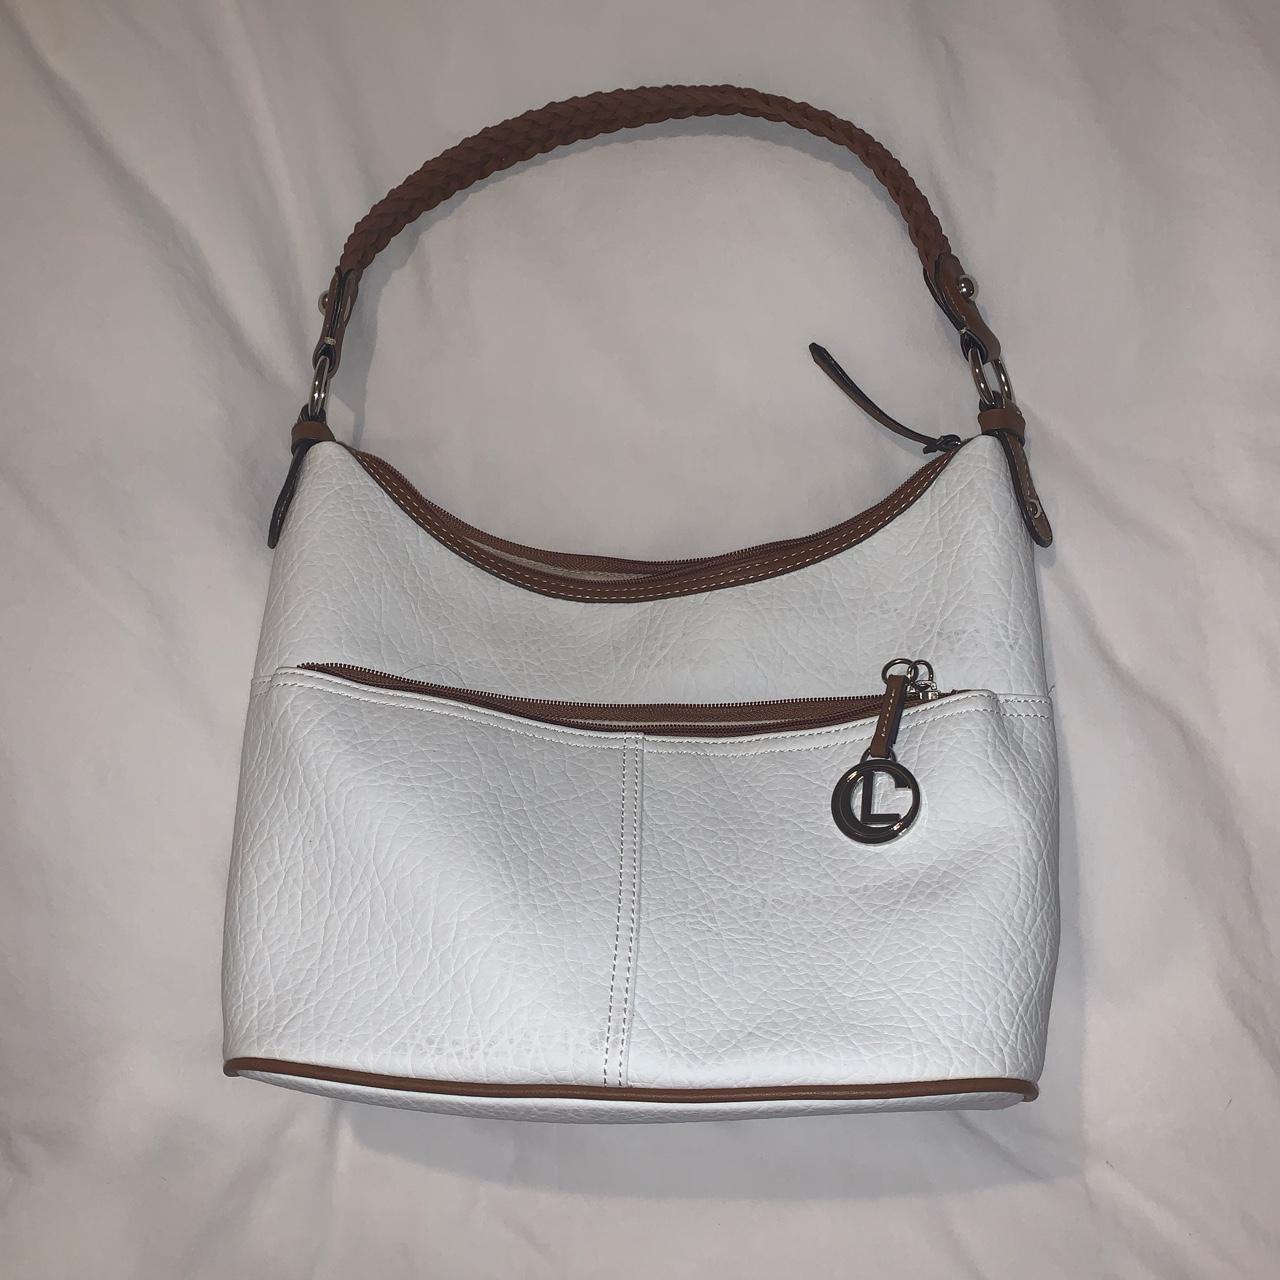 Lauren Conrad Women's Bag - White